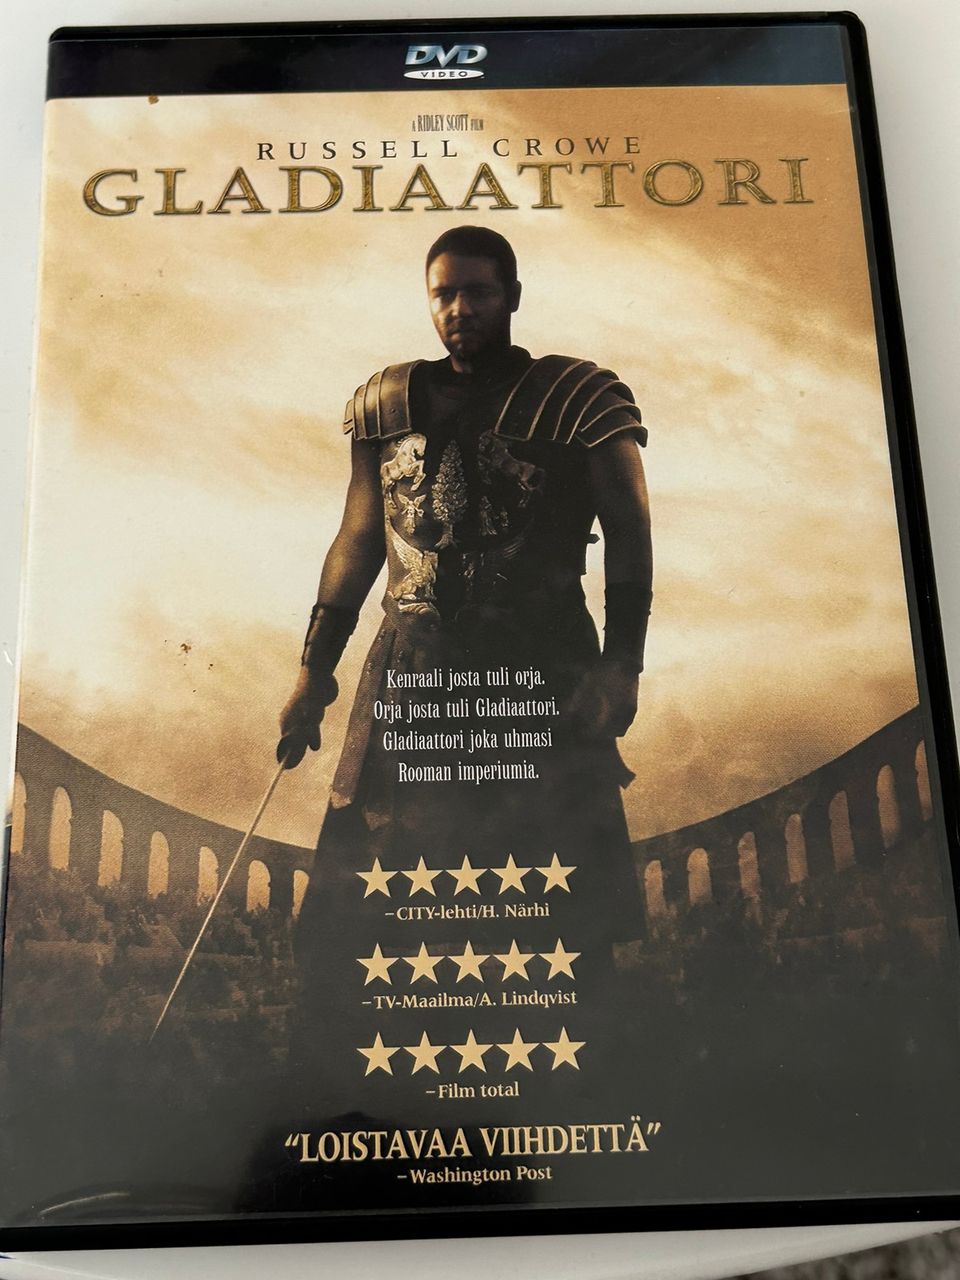 Gladiaattori dvd